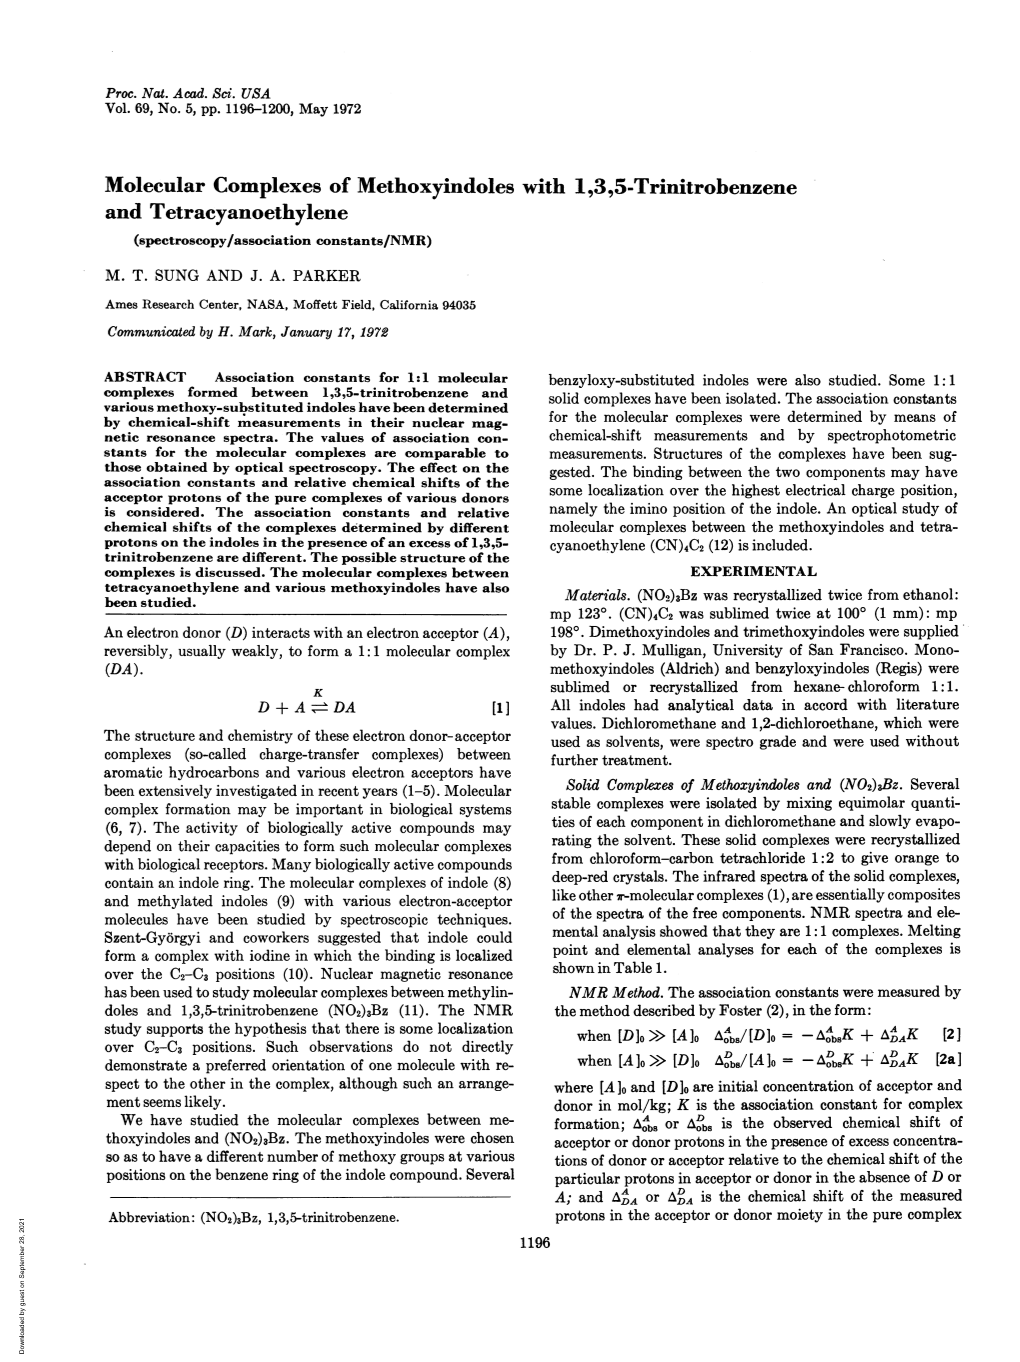 Molecular Complexes of Methoxyindoles with 1,3,5-Trinitrobenzene and Tetracyanoethylene (Spectroscopy/Association Constants/NMR) M